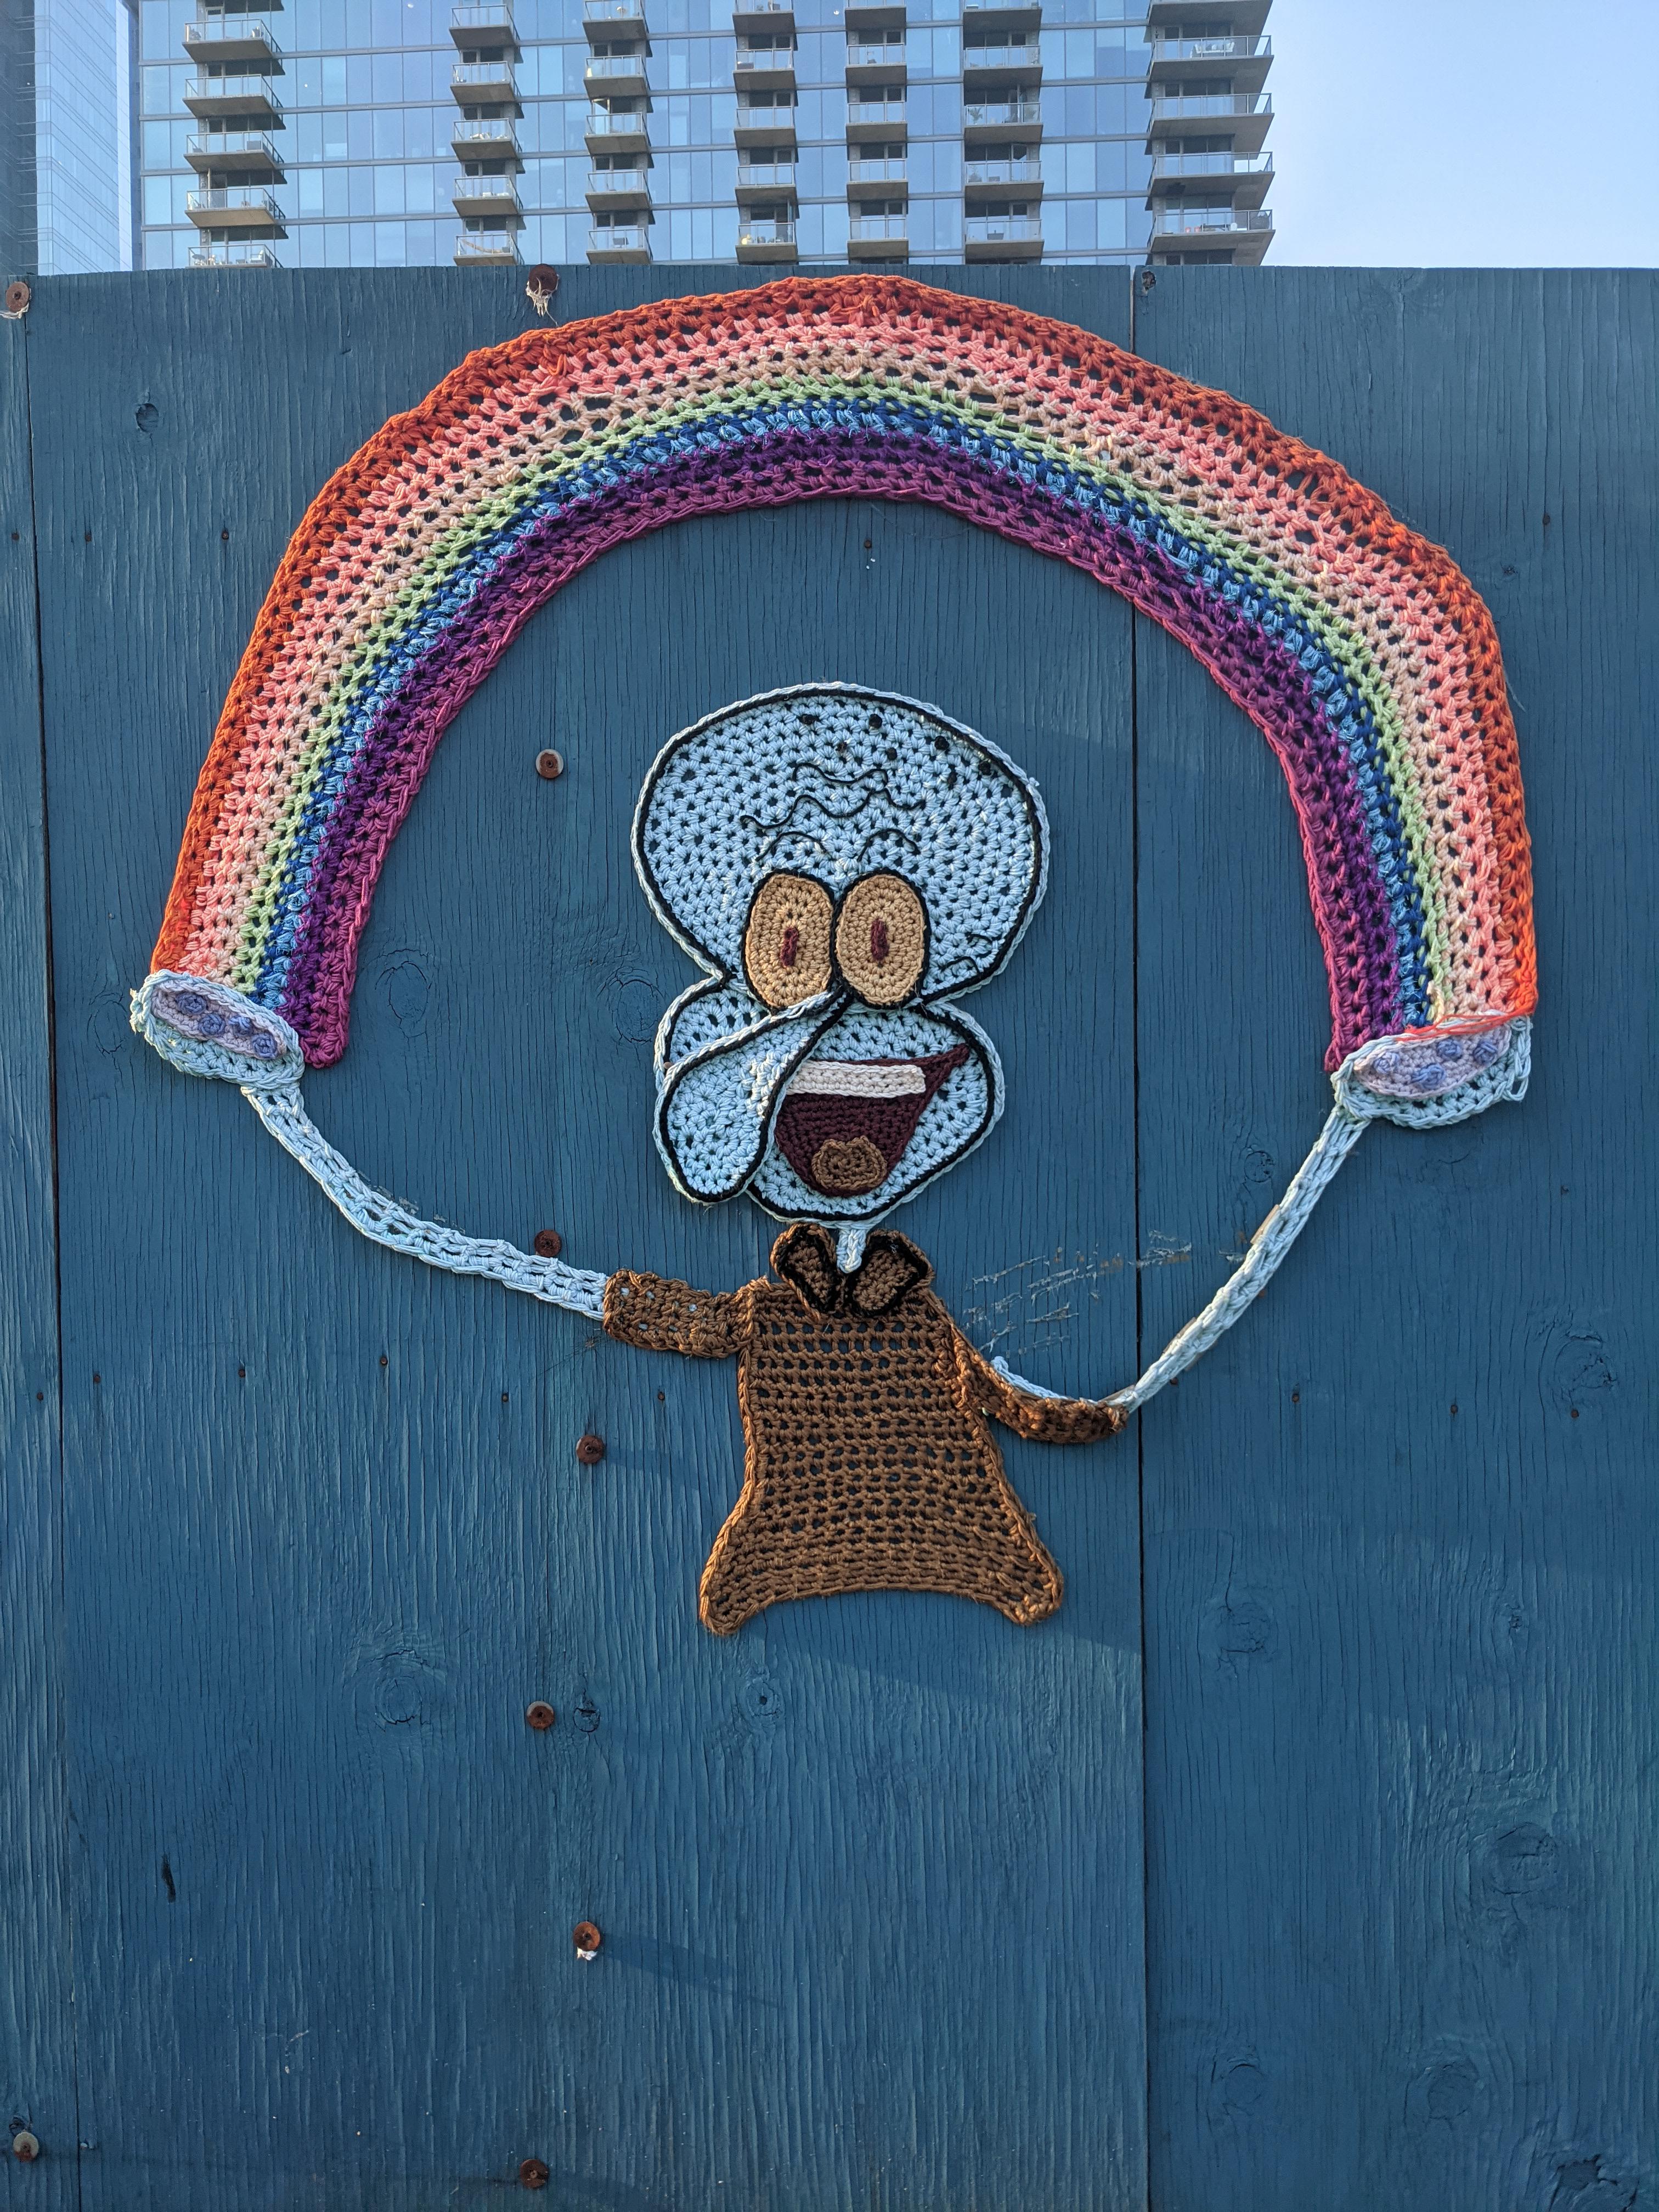 It's crocheted Squidward graffiti in Atlanta, for some reason.